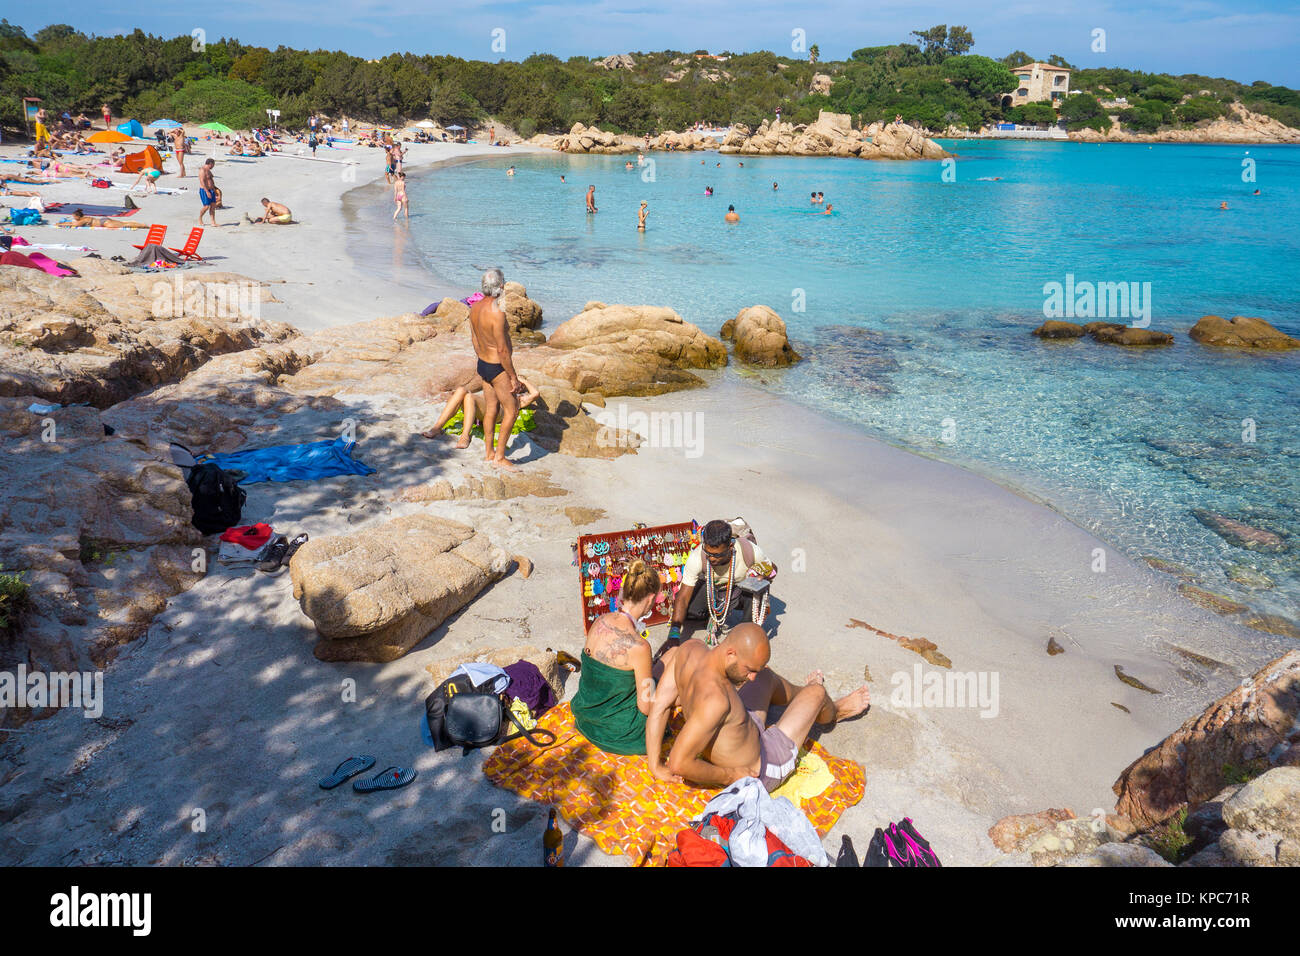 People at idyllic beach with turquoise colour sea and granite rocks at Capriccioli, Costa Smeralda, Sardinia, Italy, Mediterranean sea, Europe Stock Photo